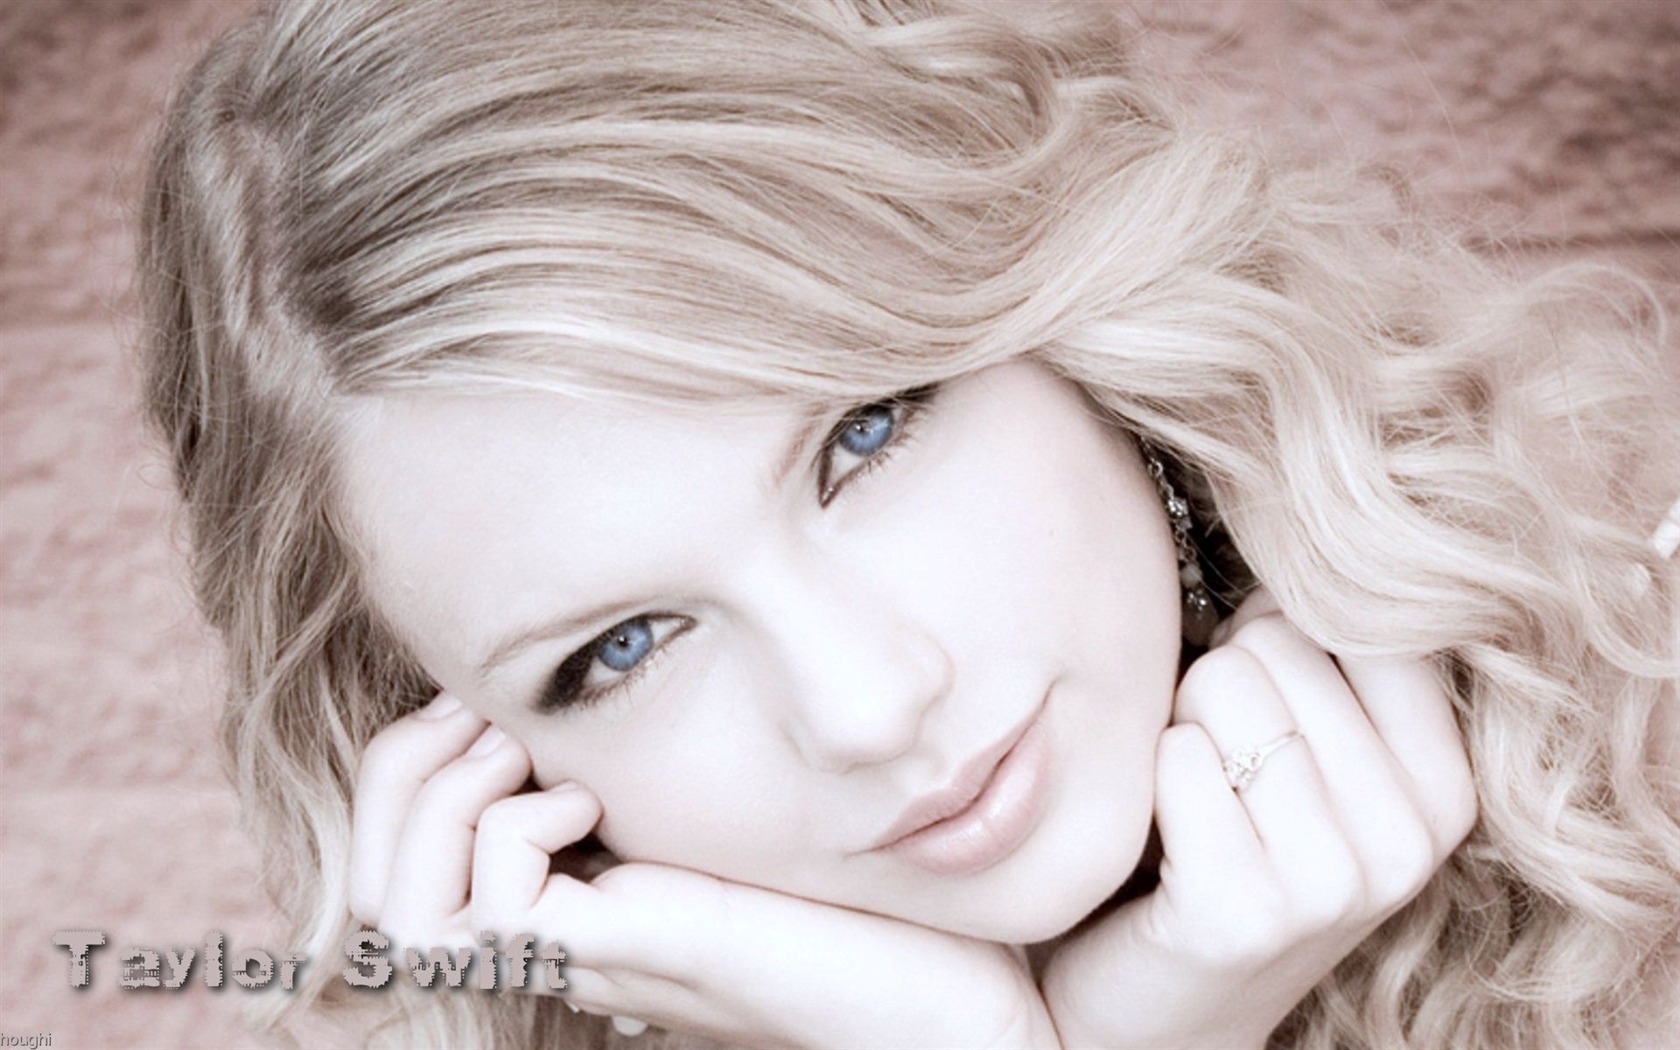 Taylor Swift 泰勒·斯威芙特 美女壁紙 #3 - 1680x1050